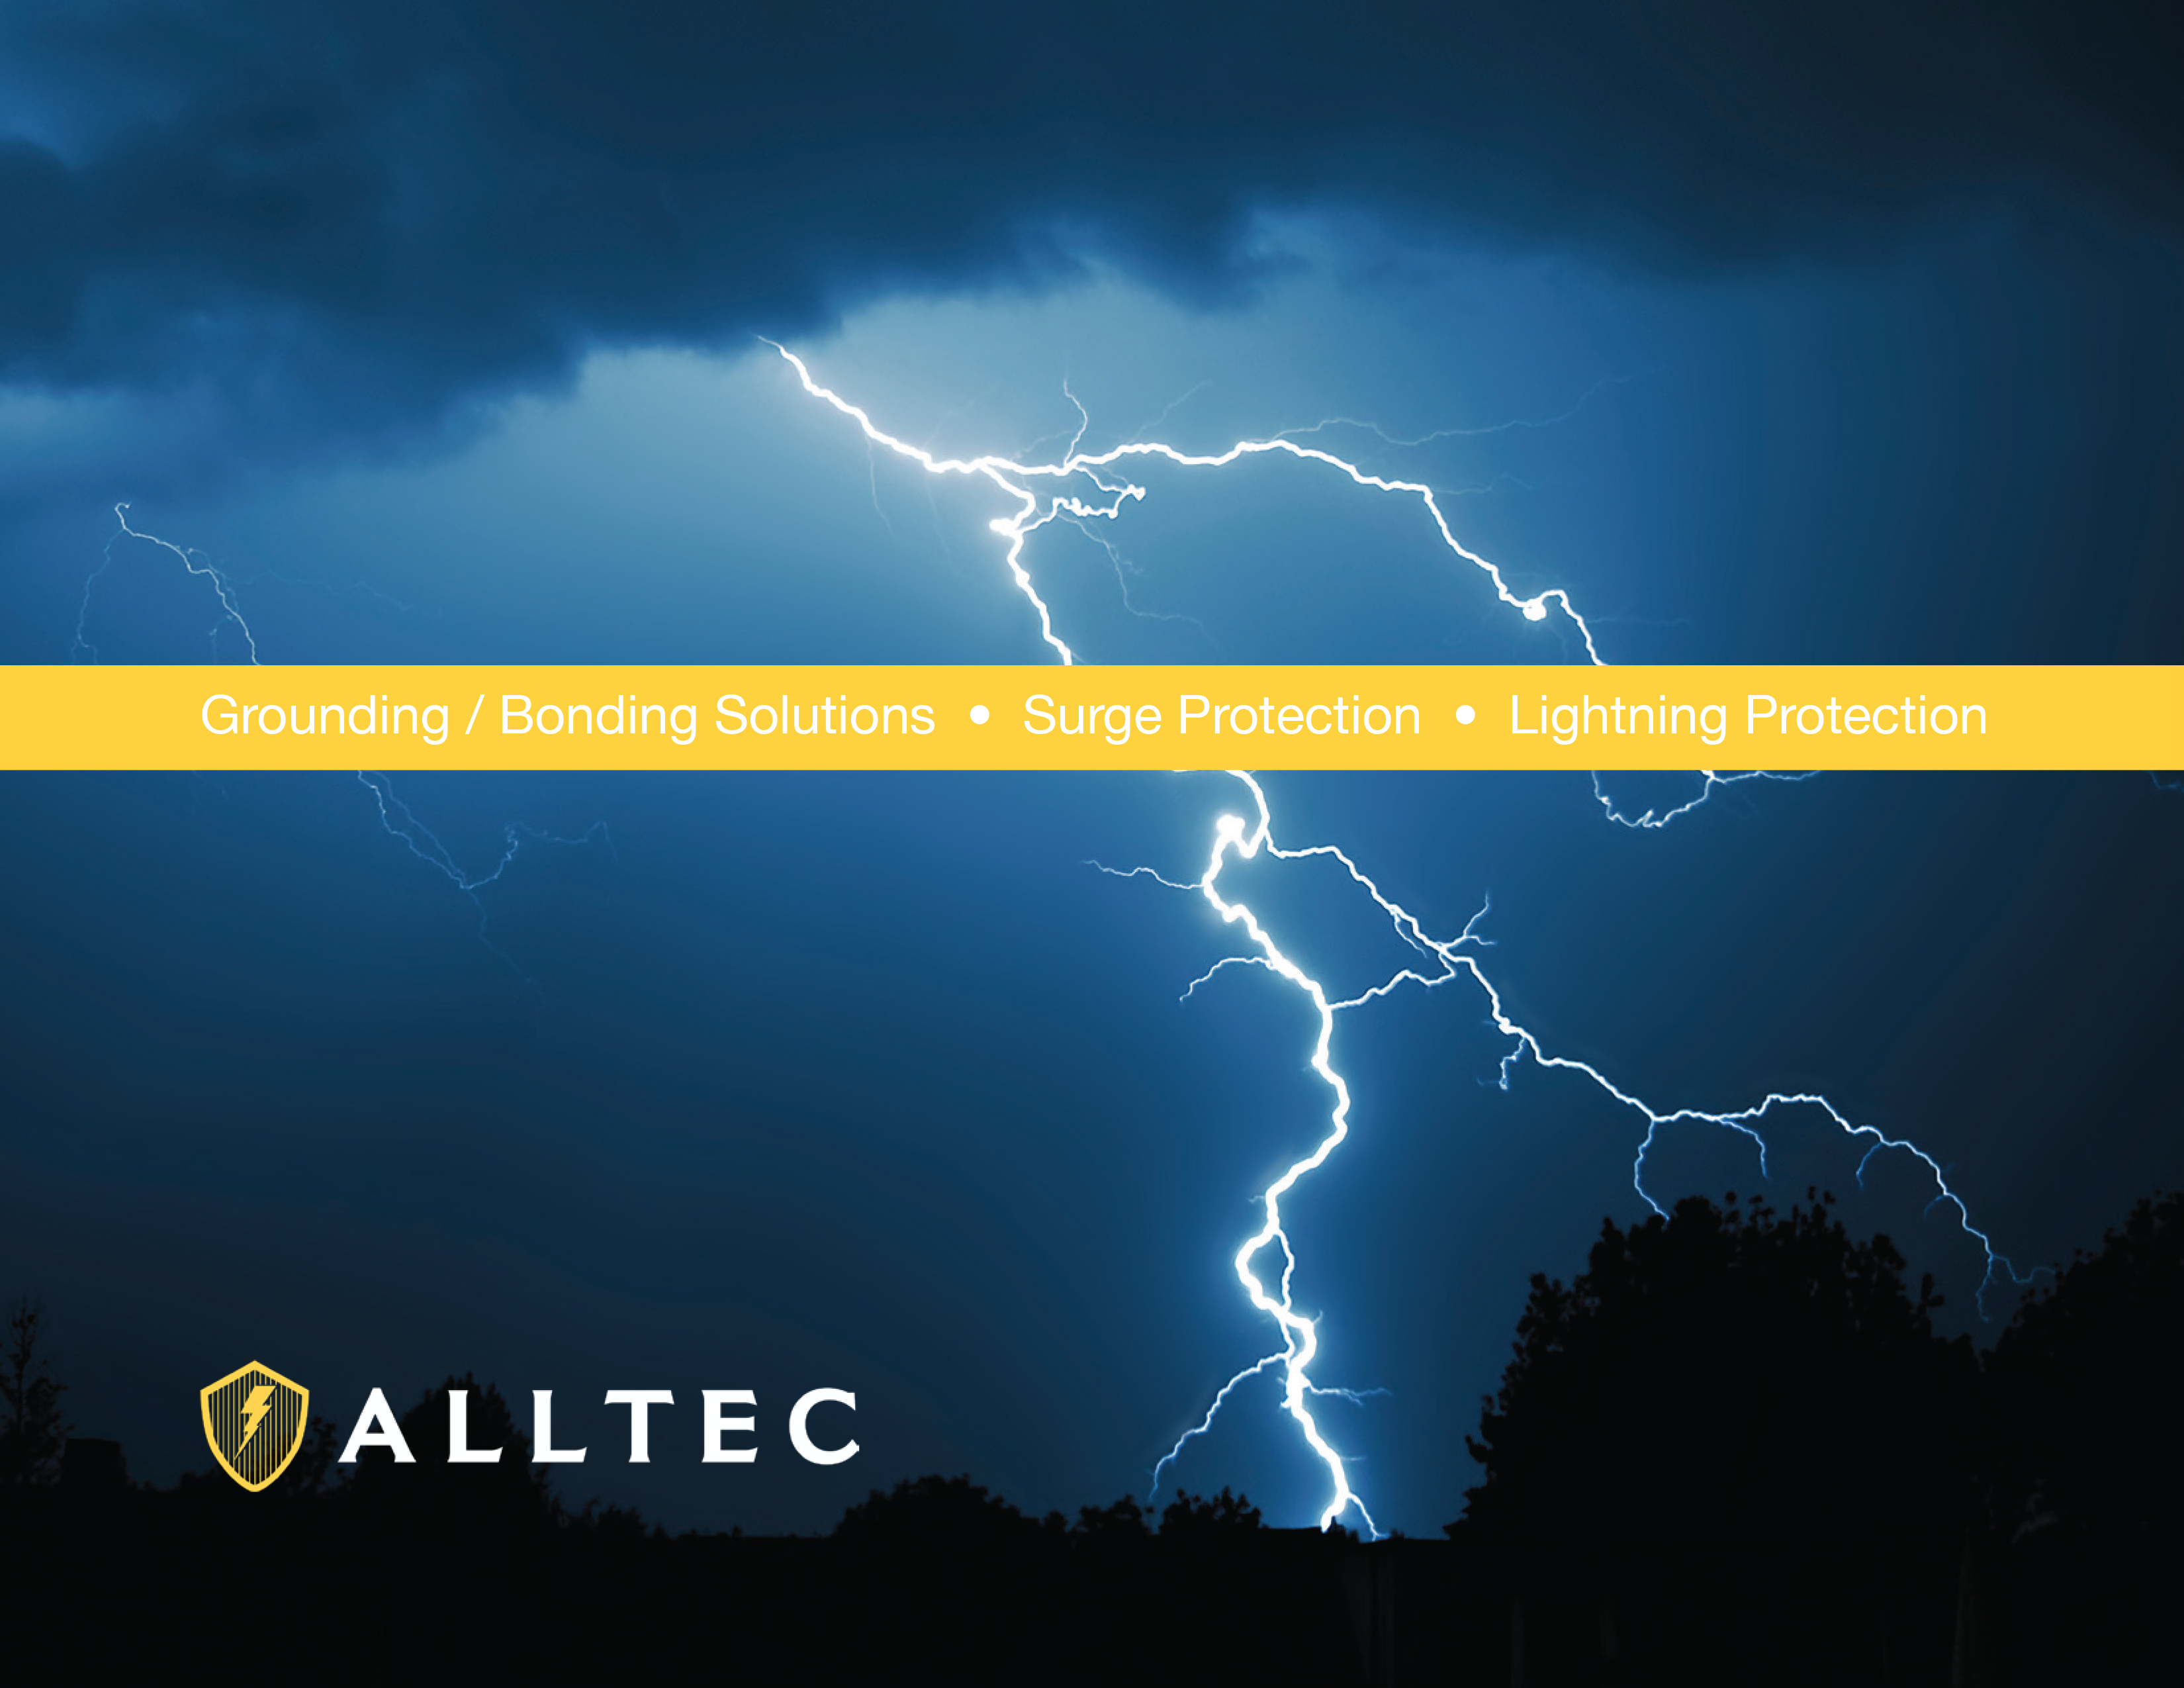 Catálogo de protección contra rayos ALLTEC